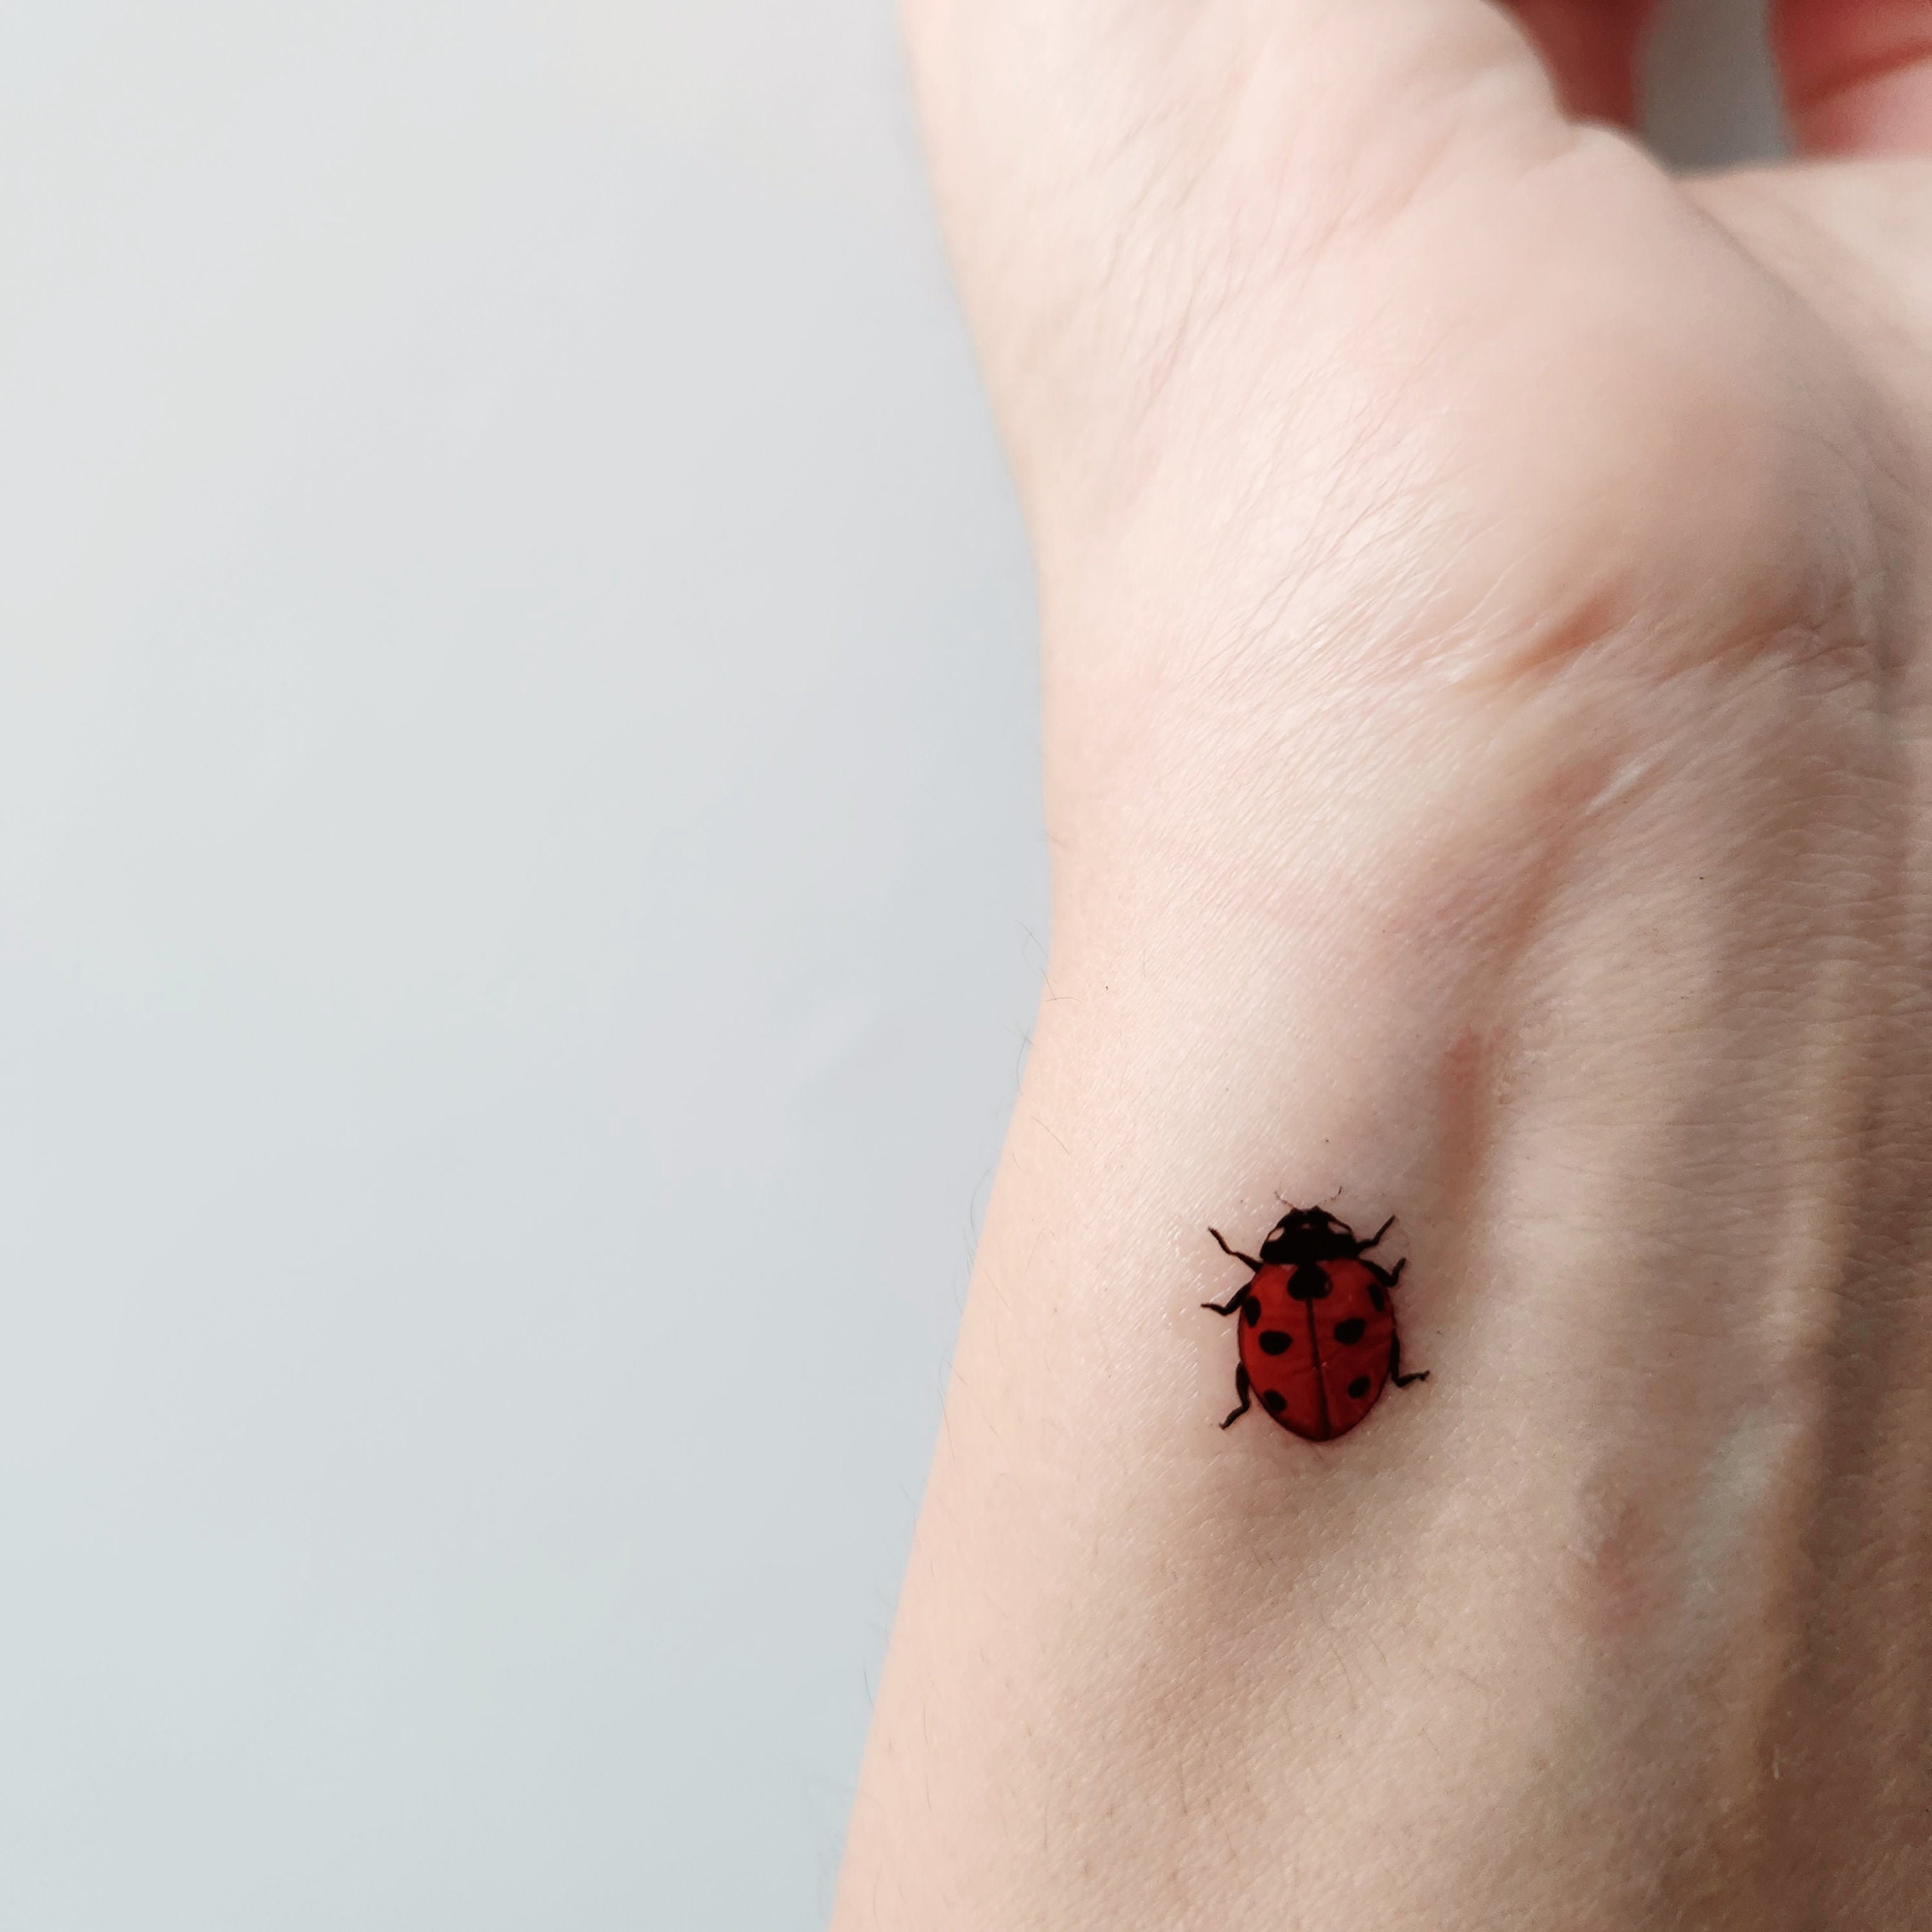 Ladybug Tattoos – Tattoo for a week